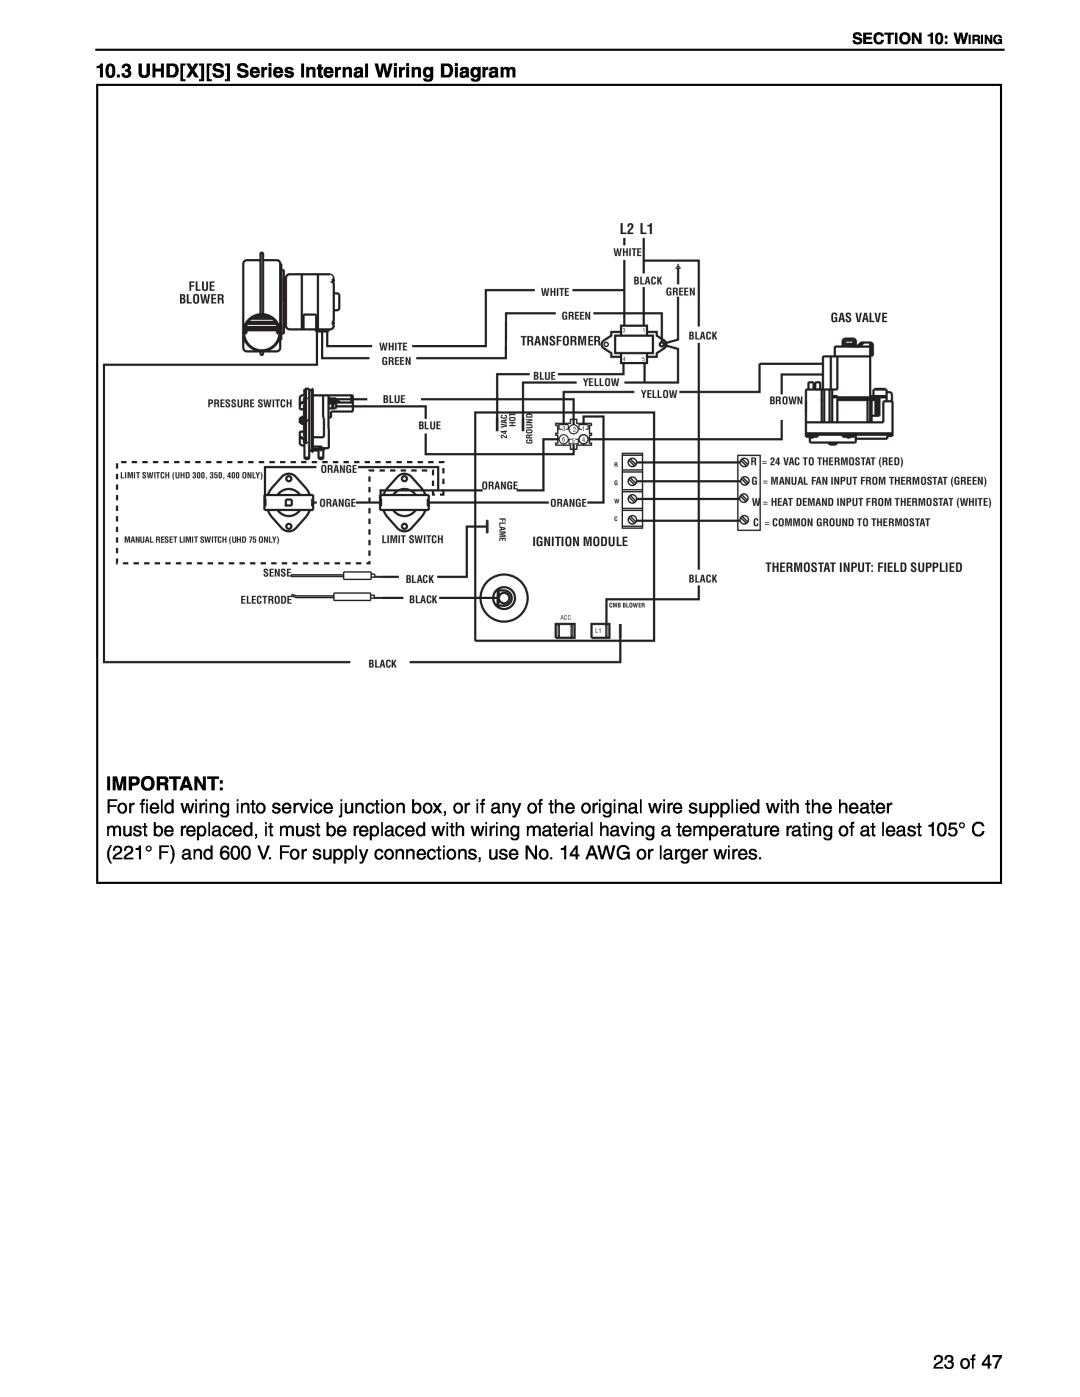 Roberts Gorden 100, 75, 125 service manual UHDXS Series Internal Wiring Diagram 